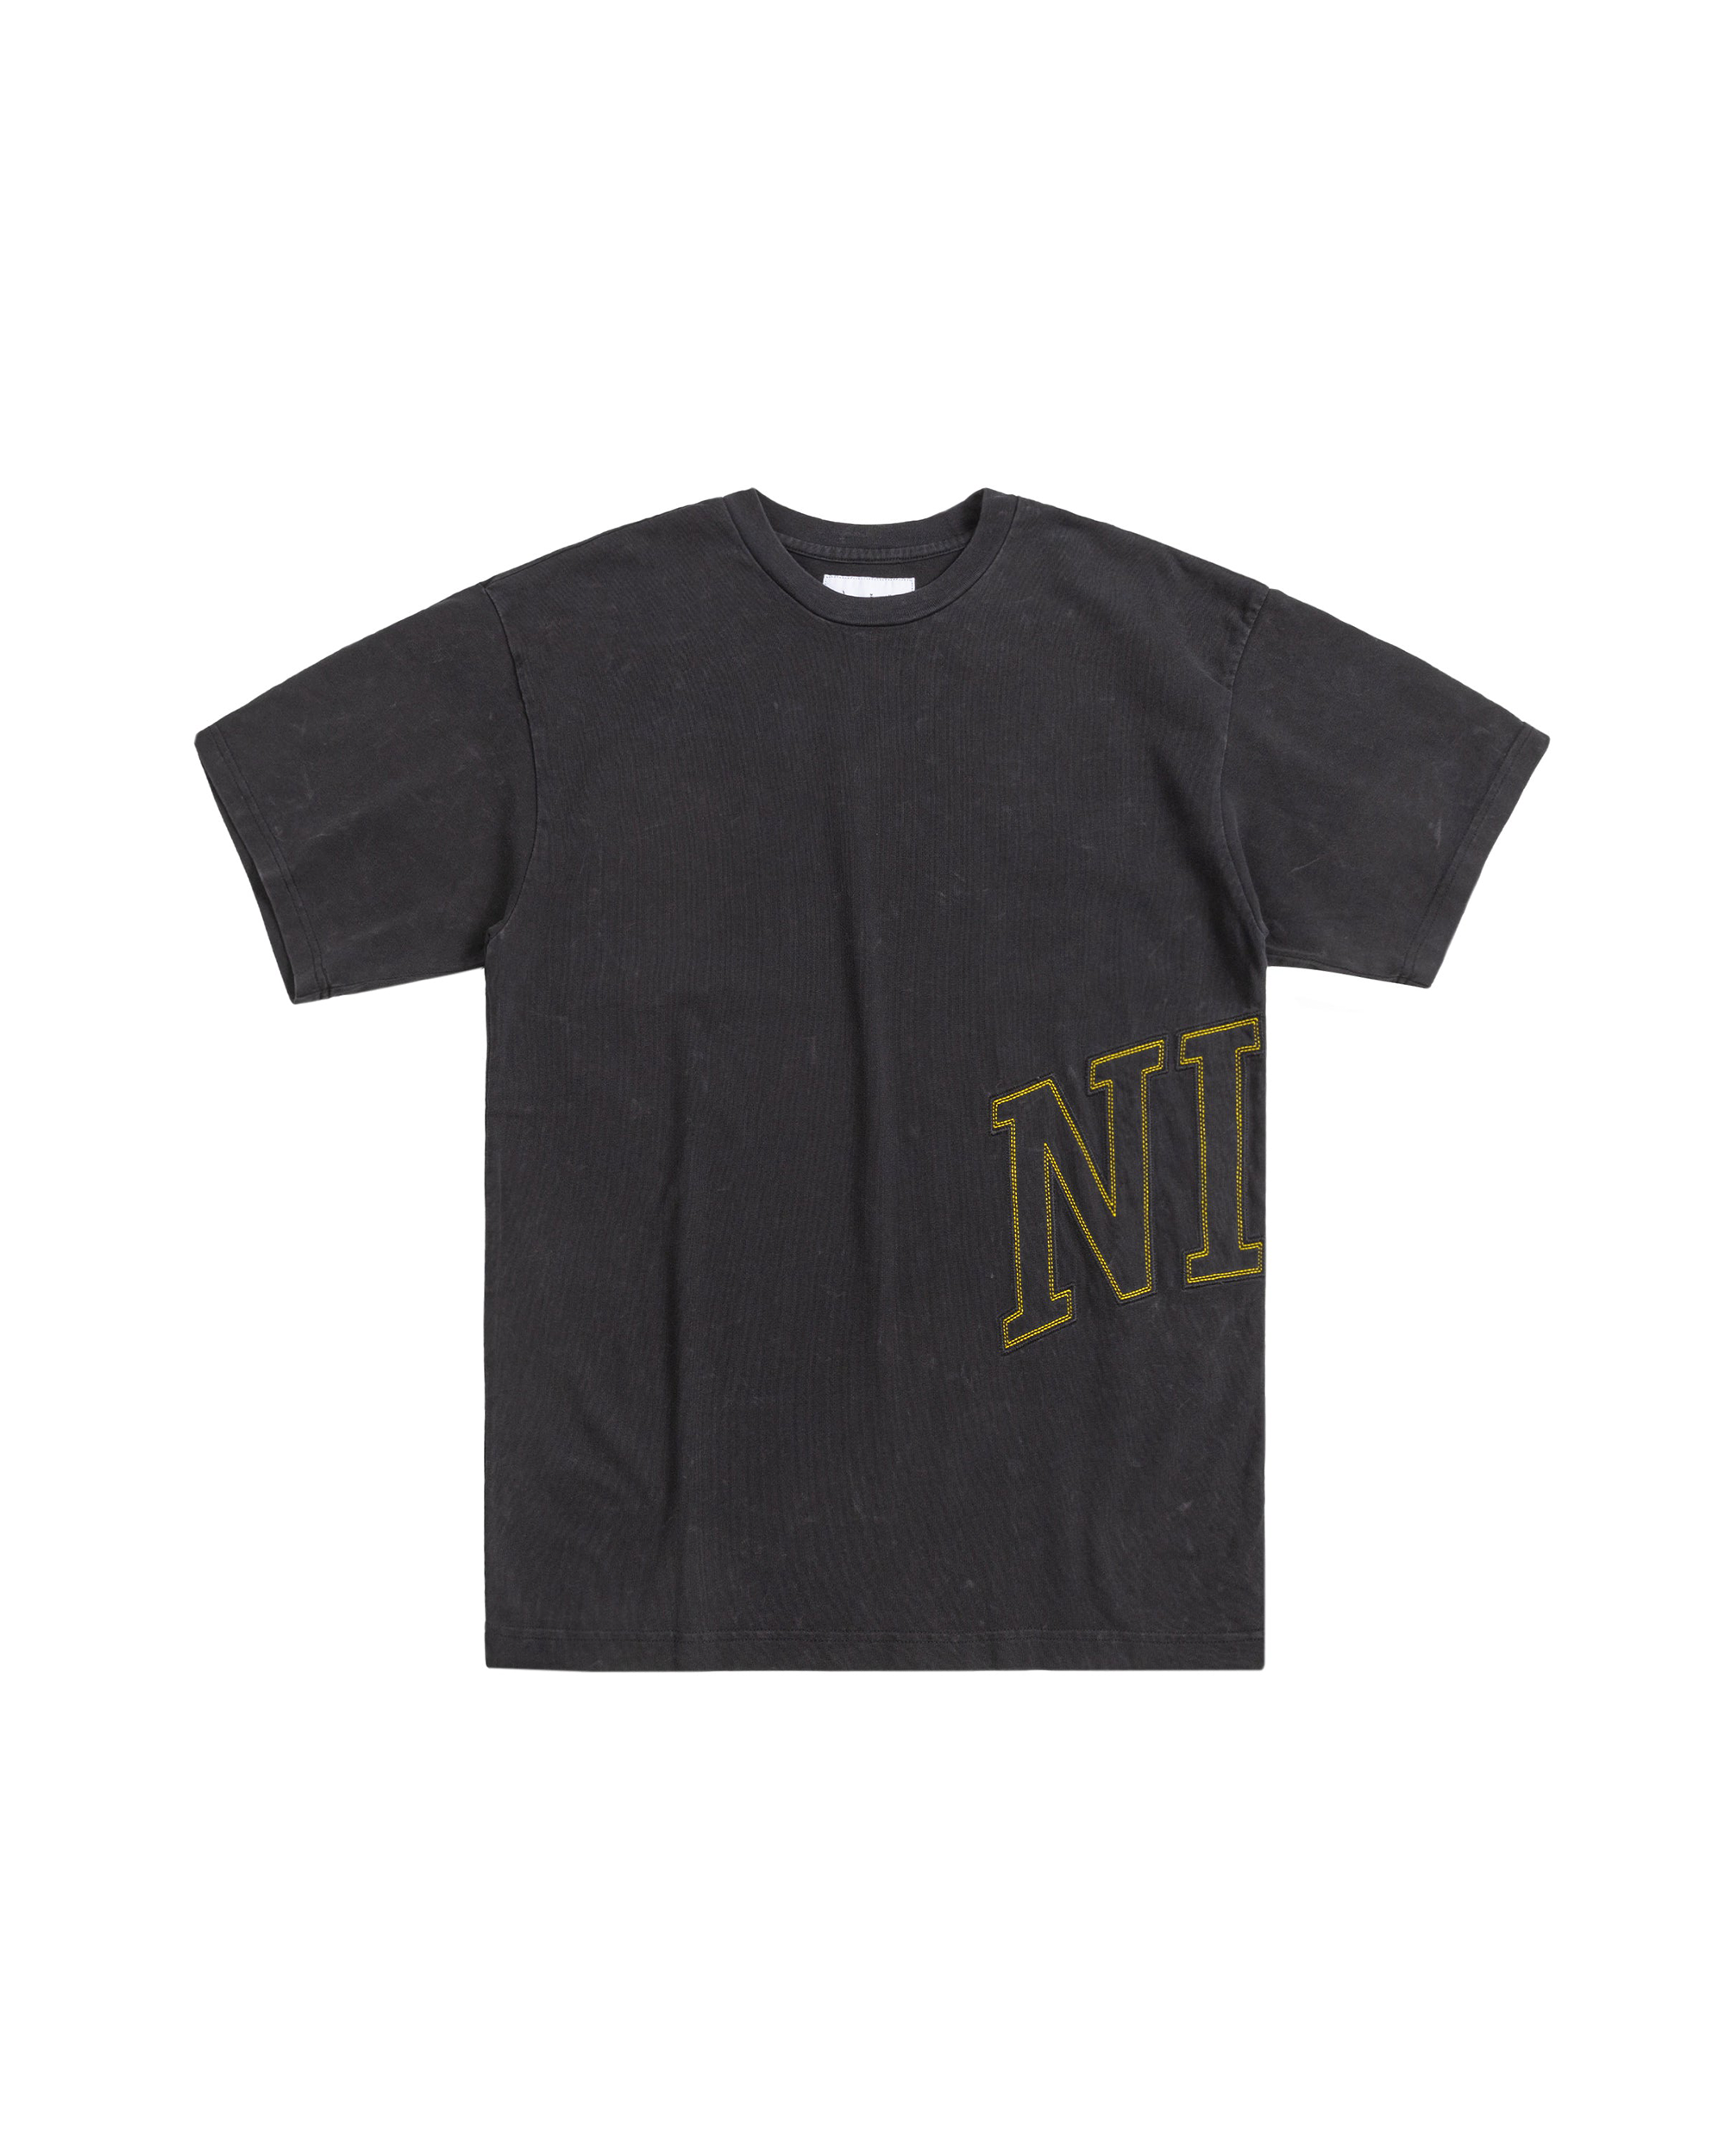 NRG Fadeaway T-shirt - Black / University Gold